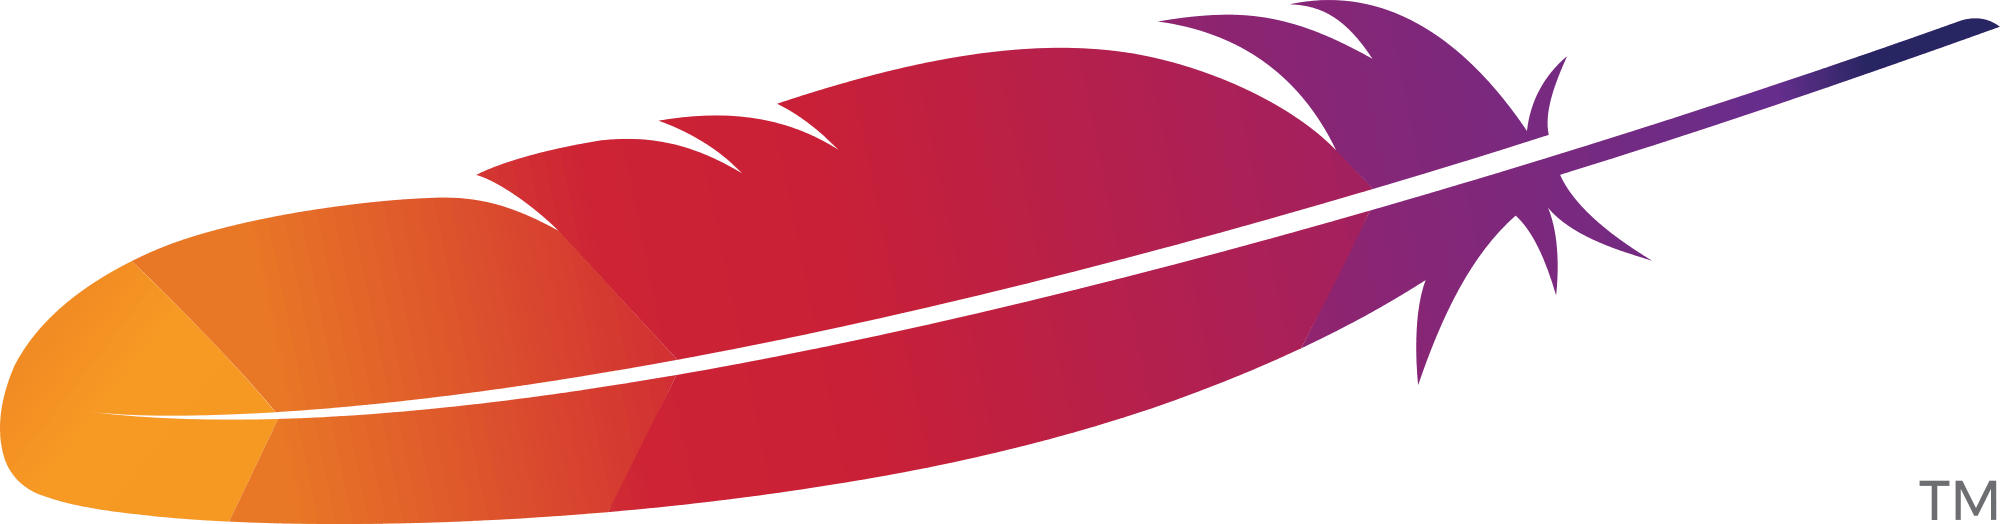 Red Server Logo - File:Apache HTTP server logo (2016).svg - Wikimedia Commons